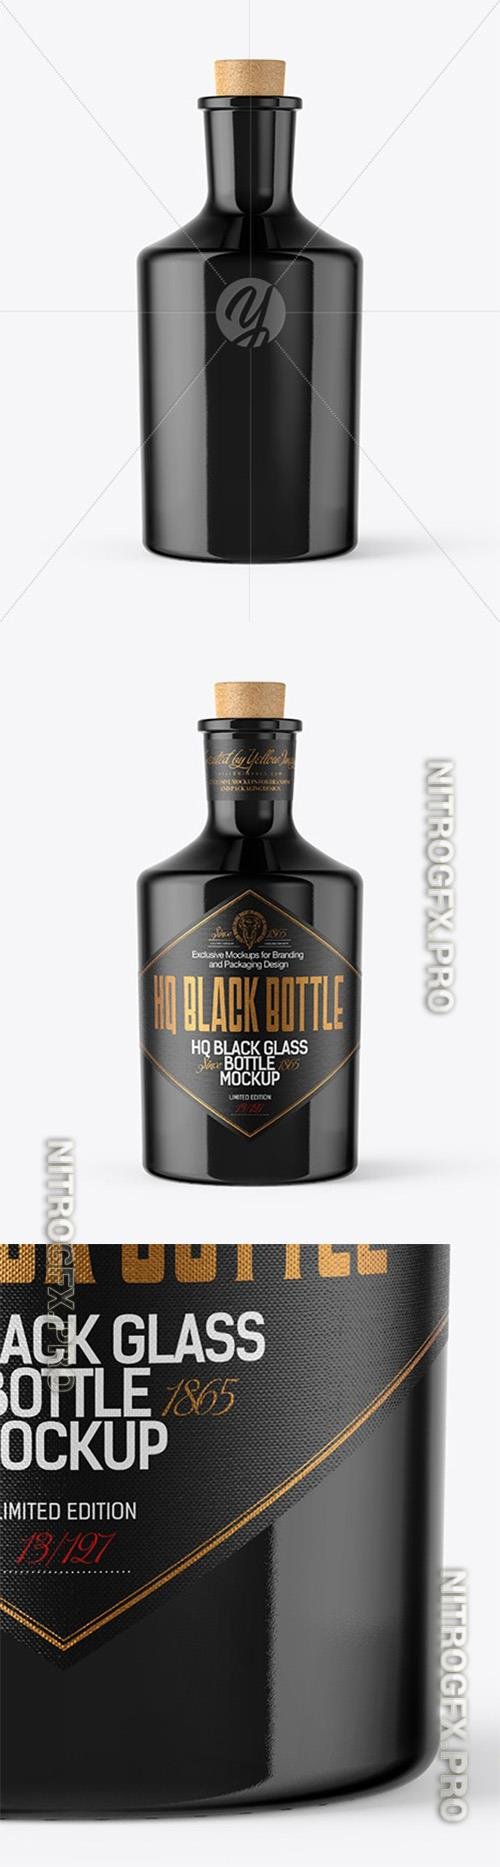 Black Glass Bottle with Cork Mockup 45981